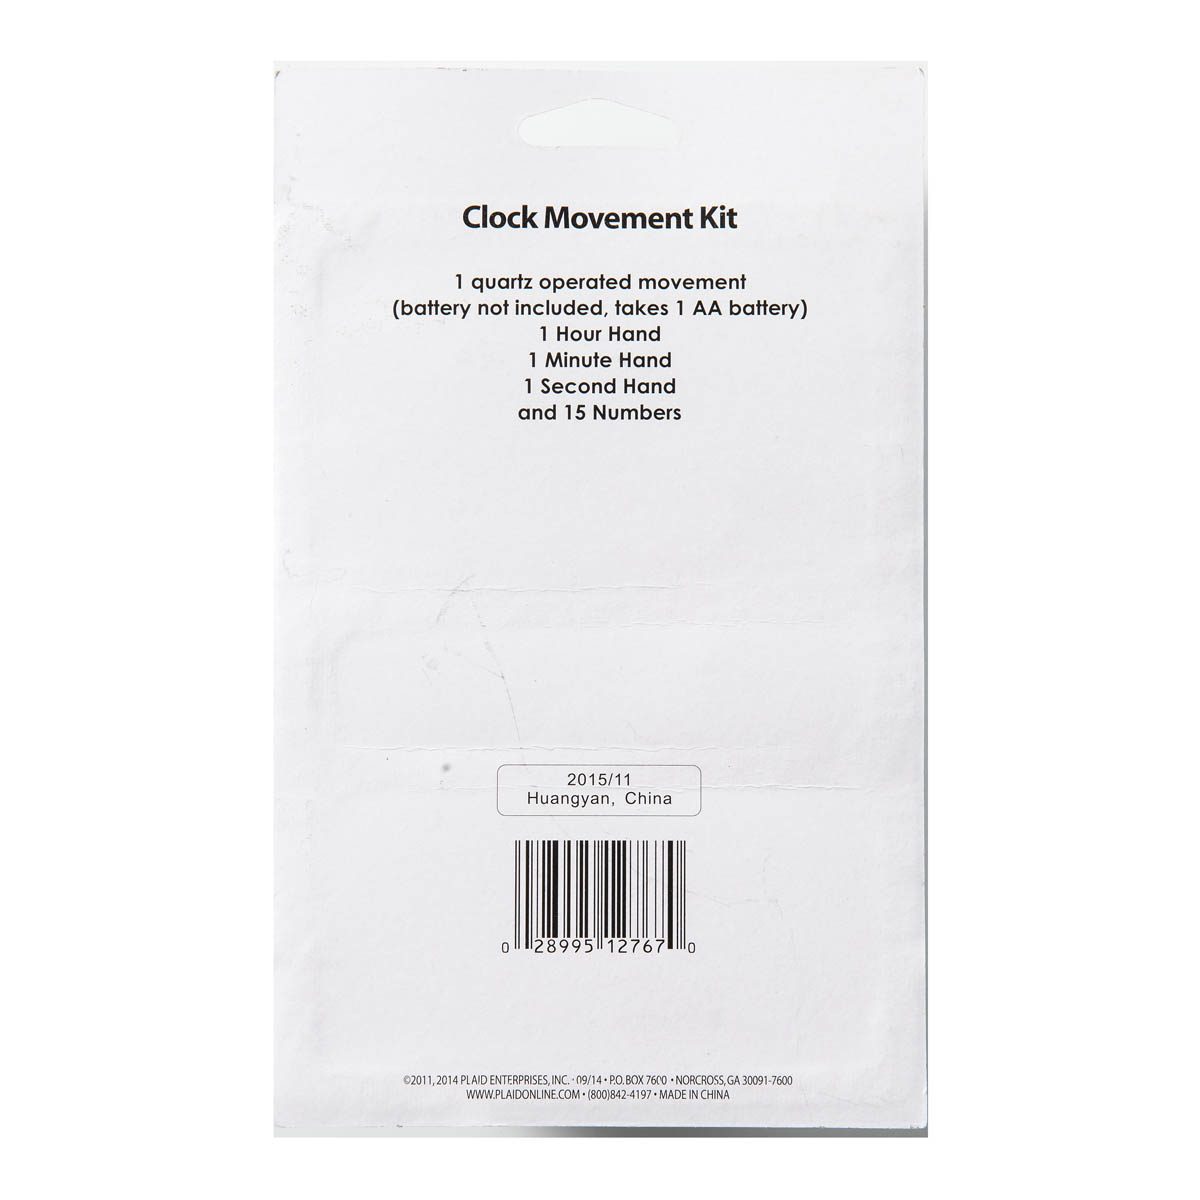 Plaid ® Accessories - Clock Movement Kit, 19 pieces - 12767